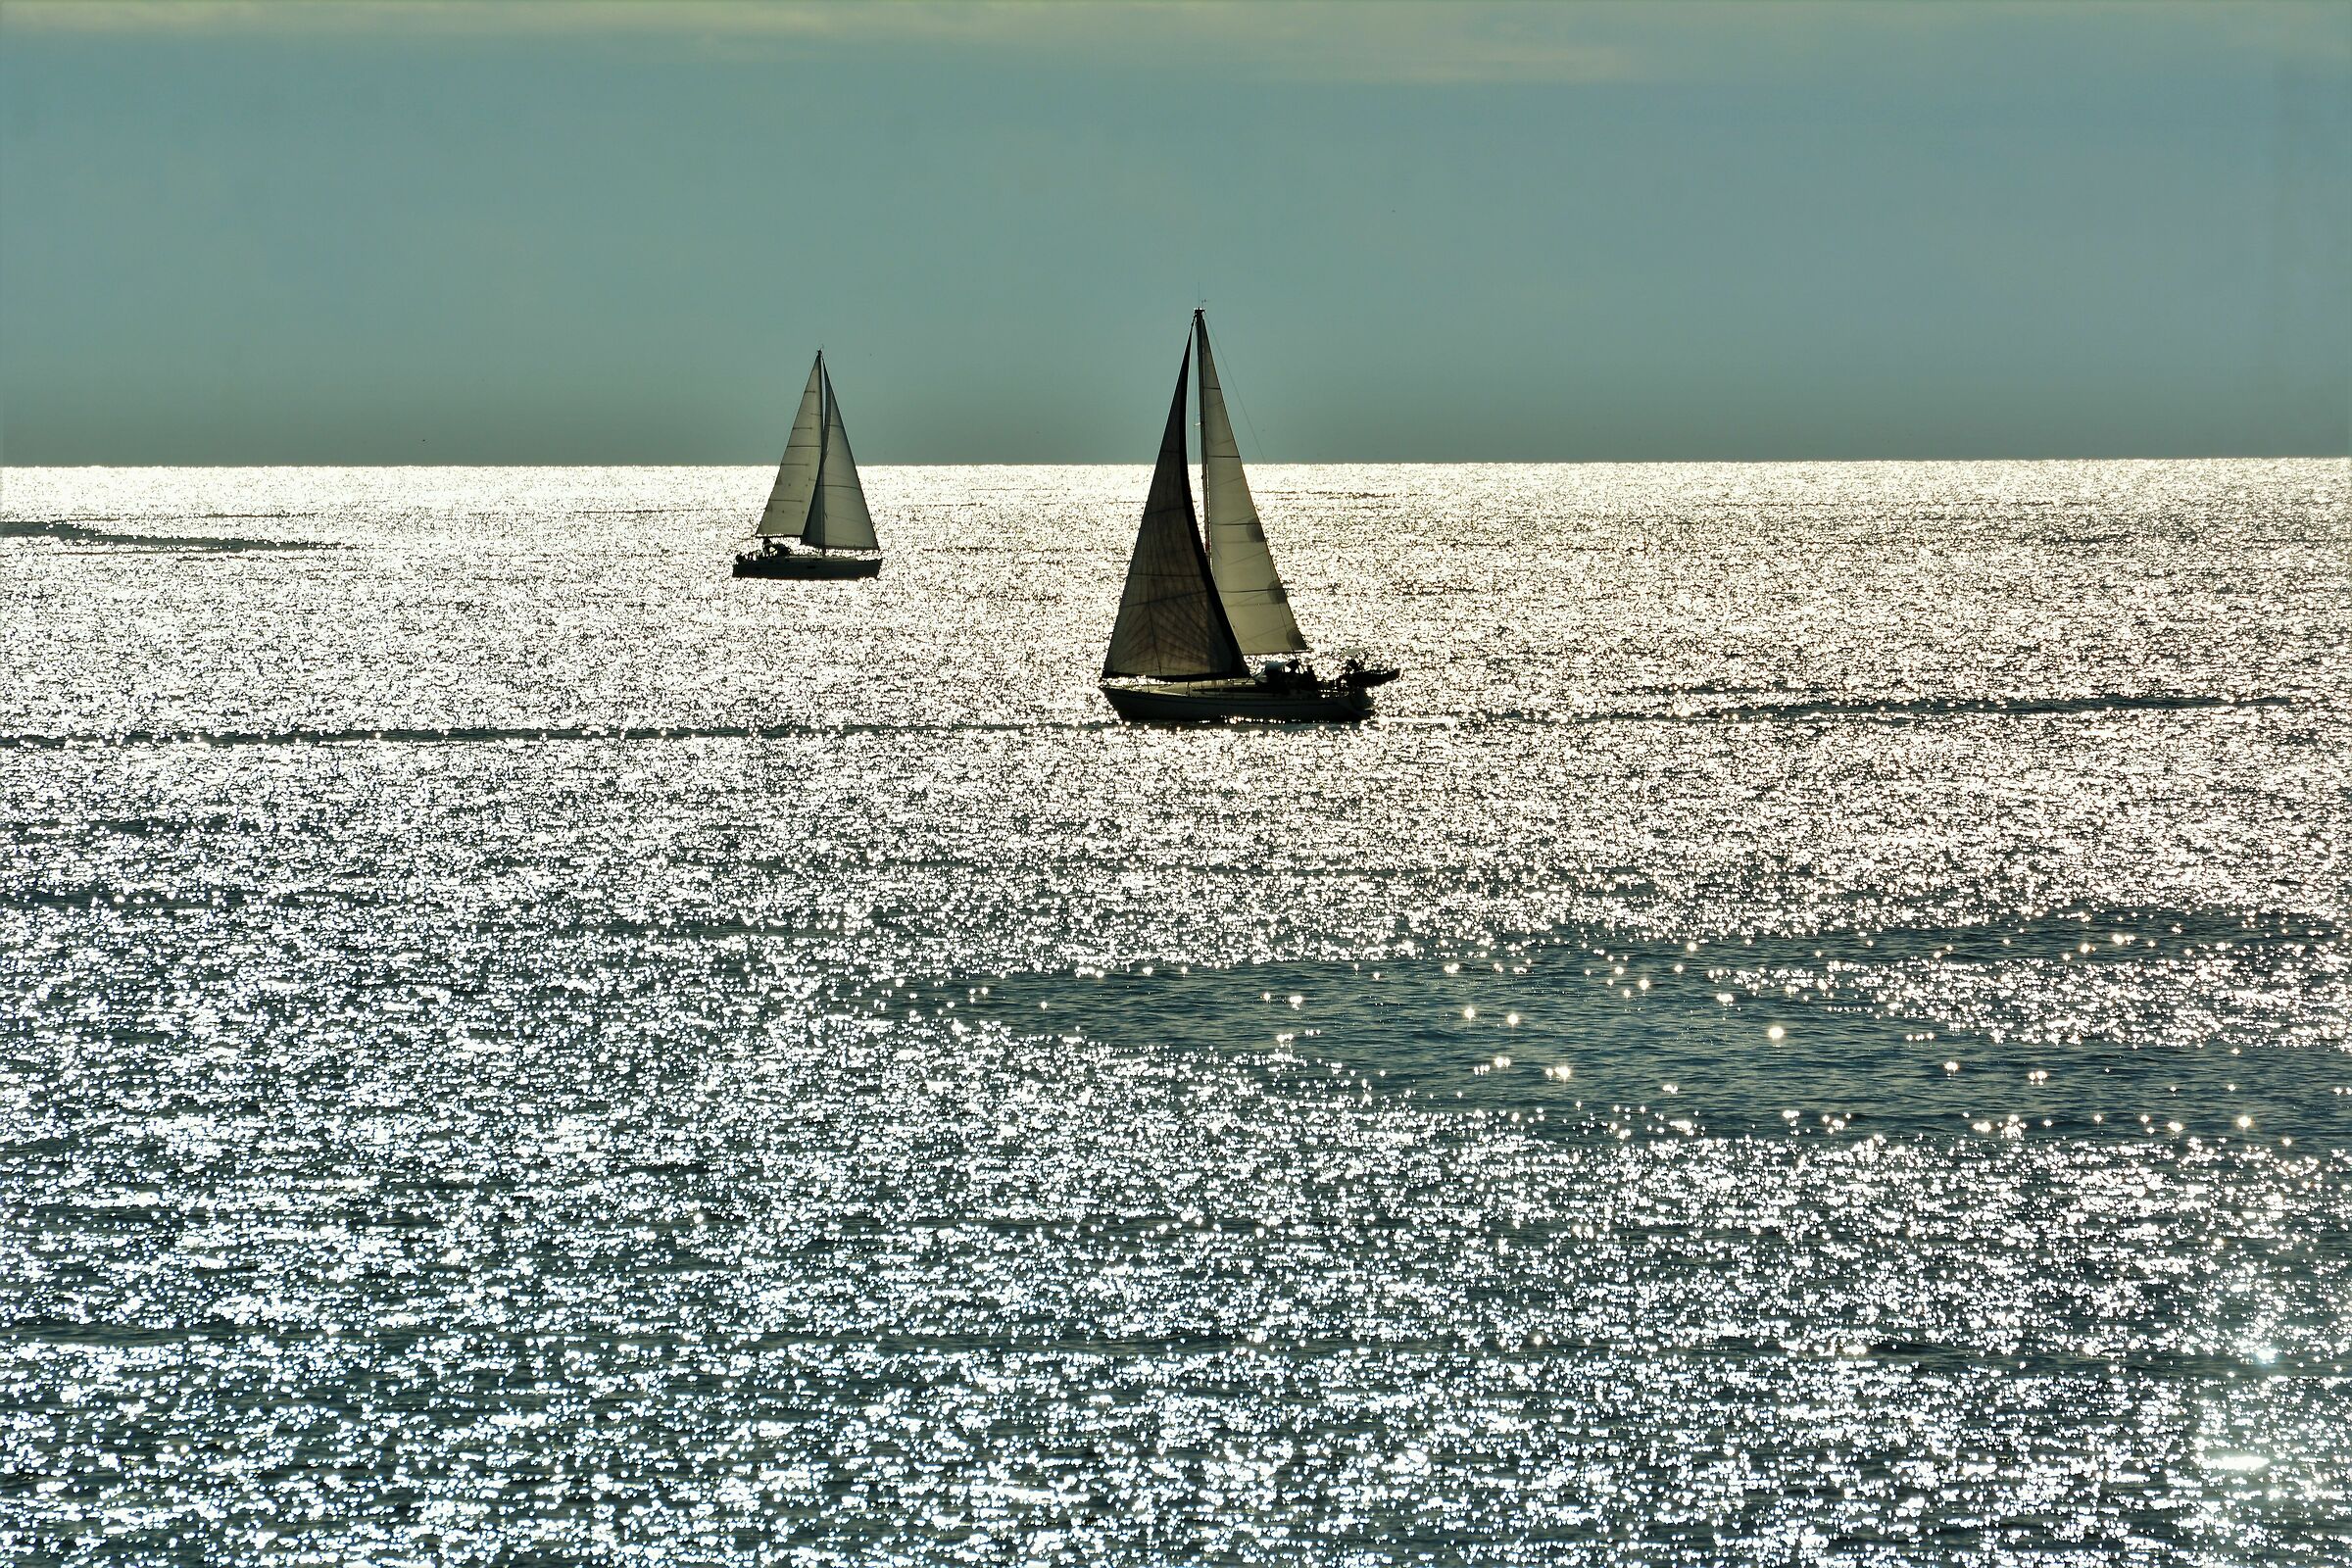 Sailing with pleasure...